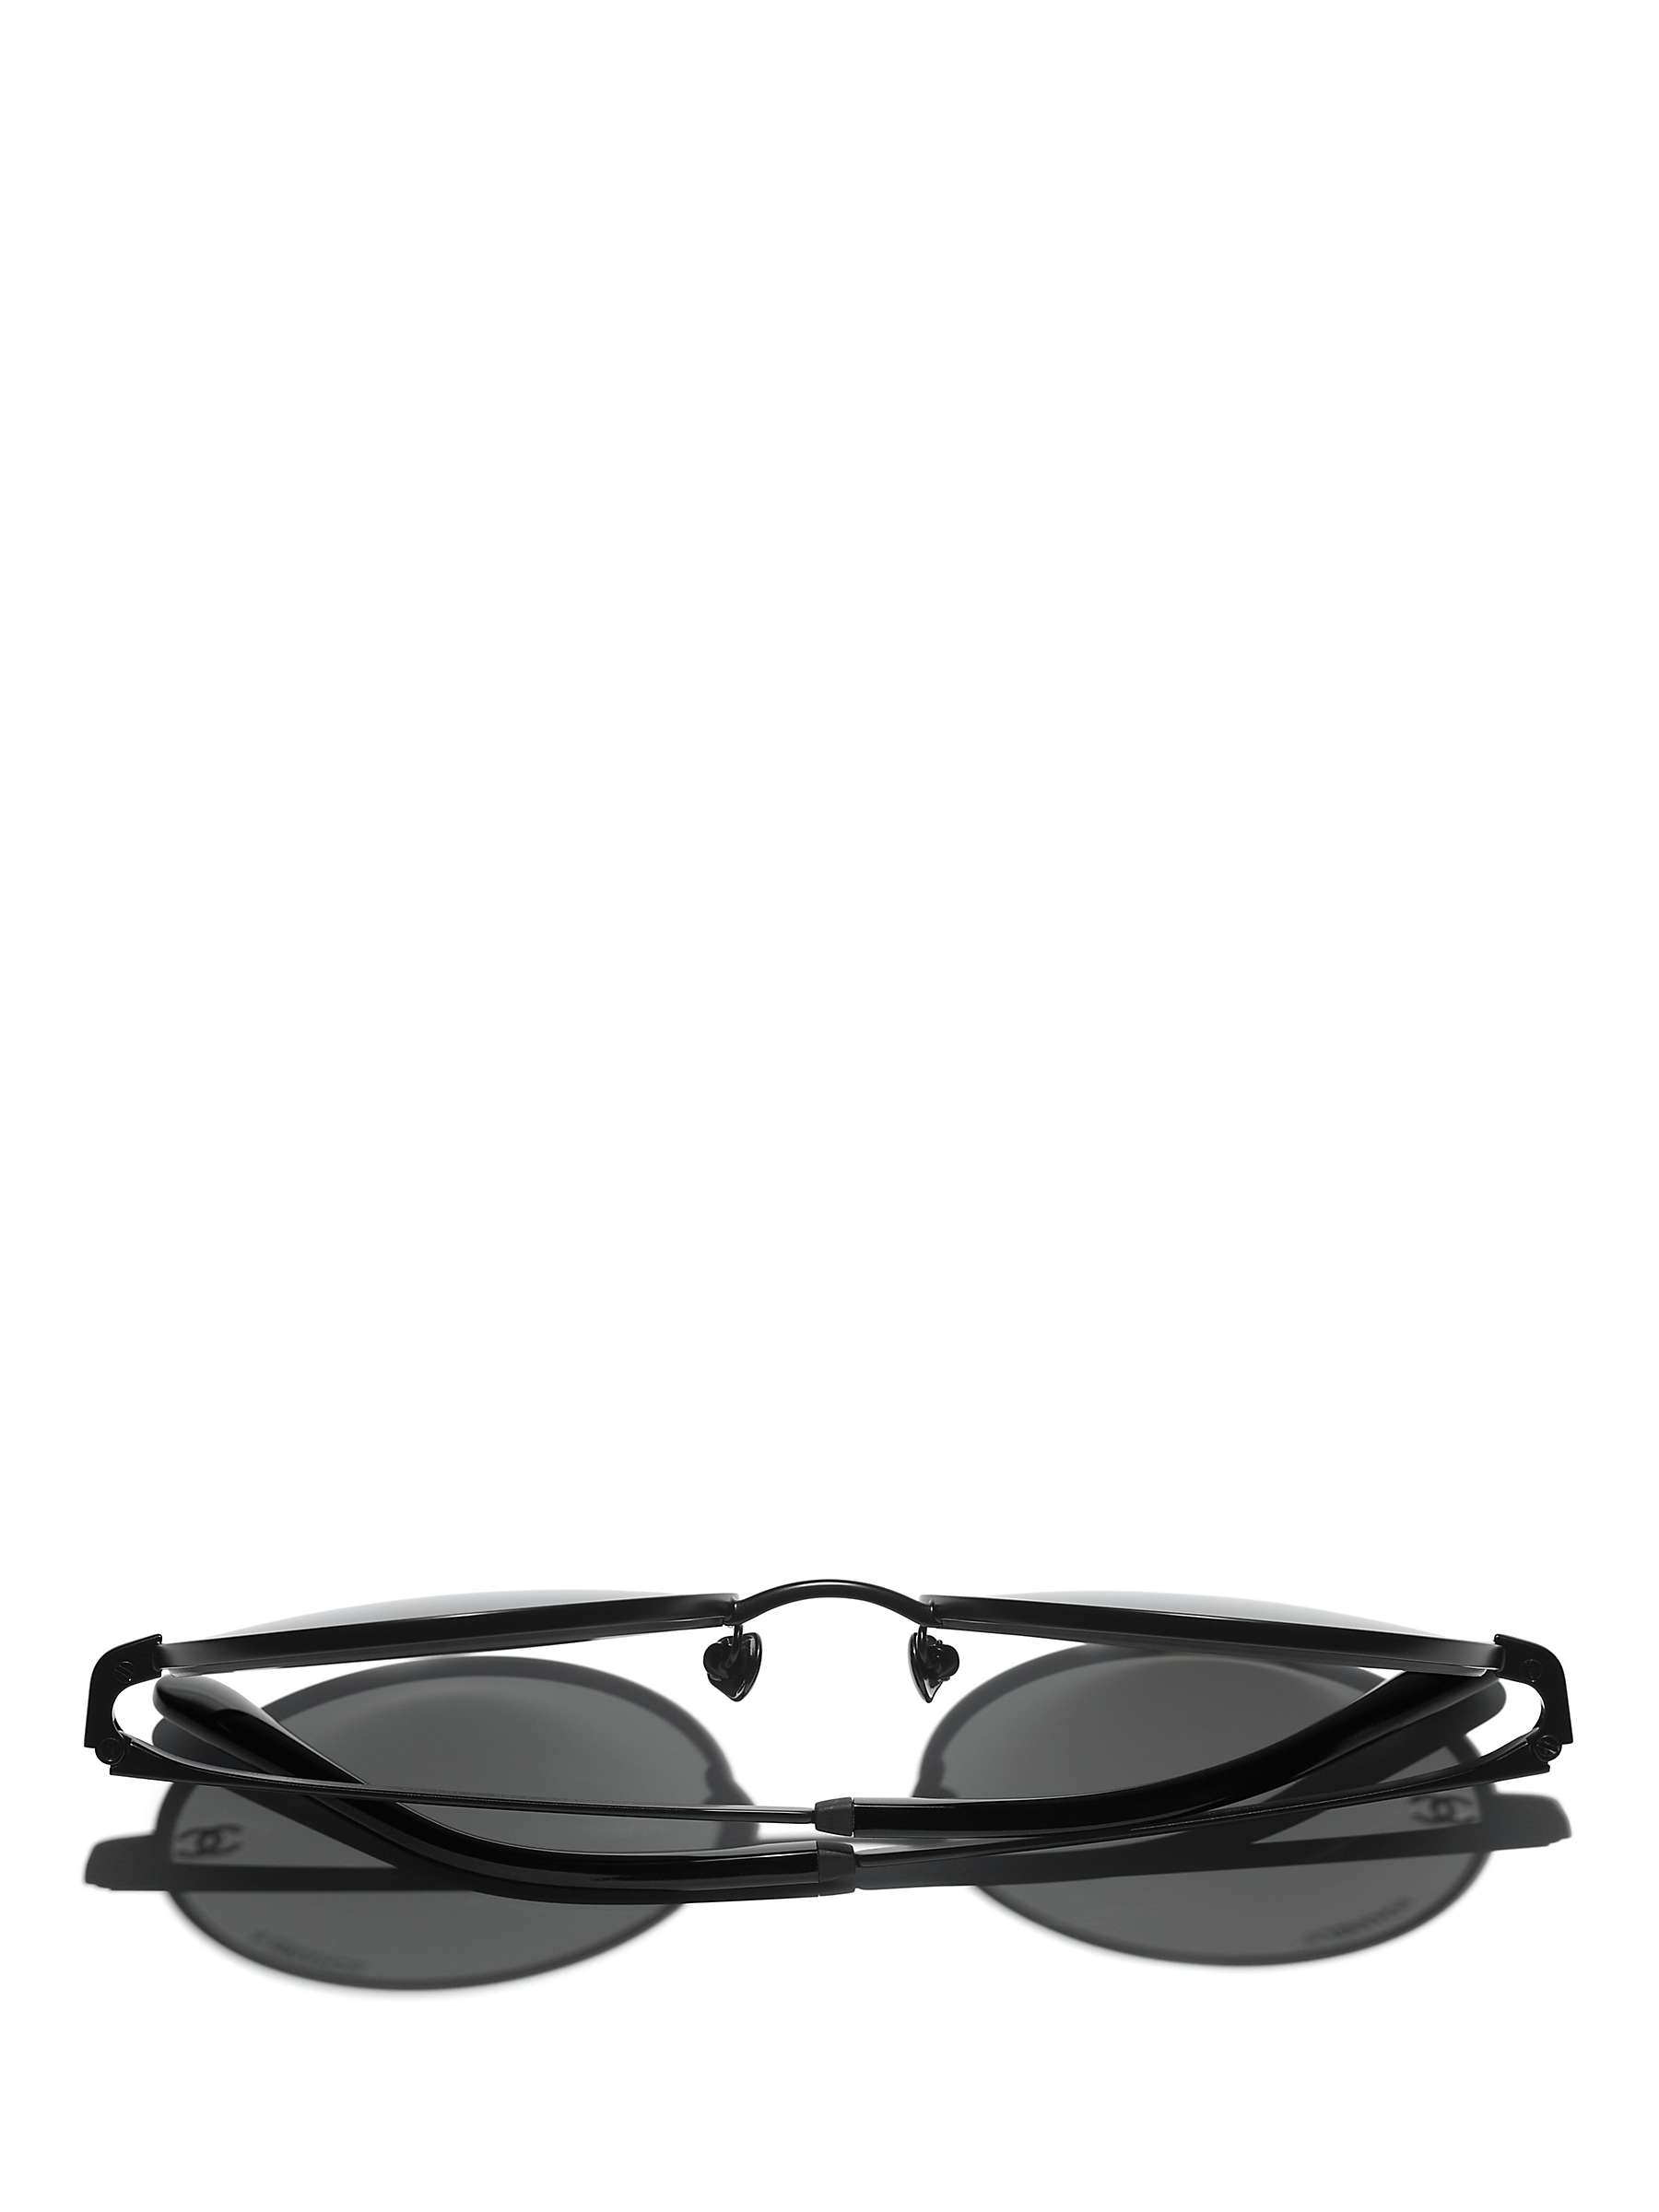 Buy CHANEL Round Sunglasses CH4268 Matte Black/Grey Online at johnlewis.com